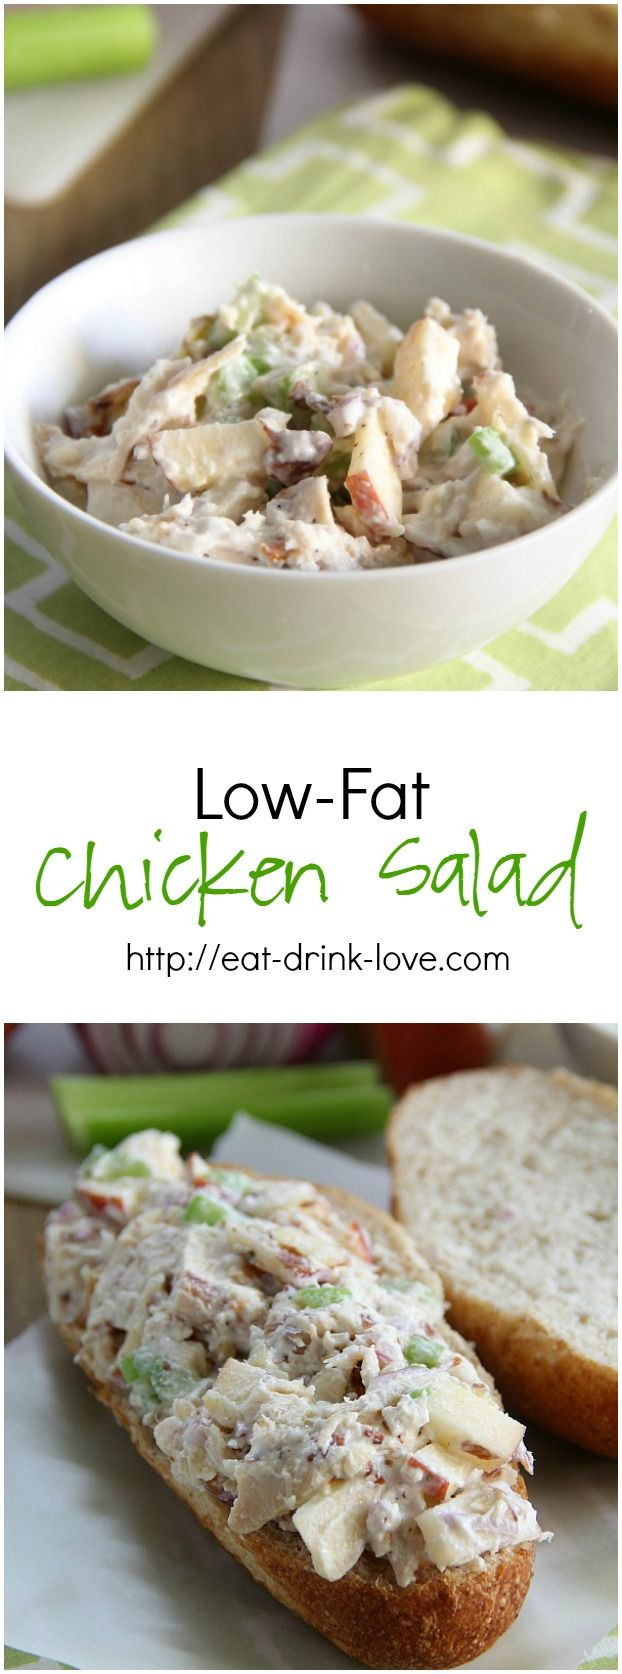 Healthy Low Fat Chicken Recipes
 Best 25 Low fat chicken recipes ideas on Pinterest